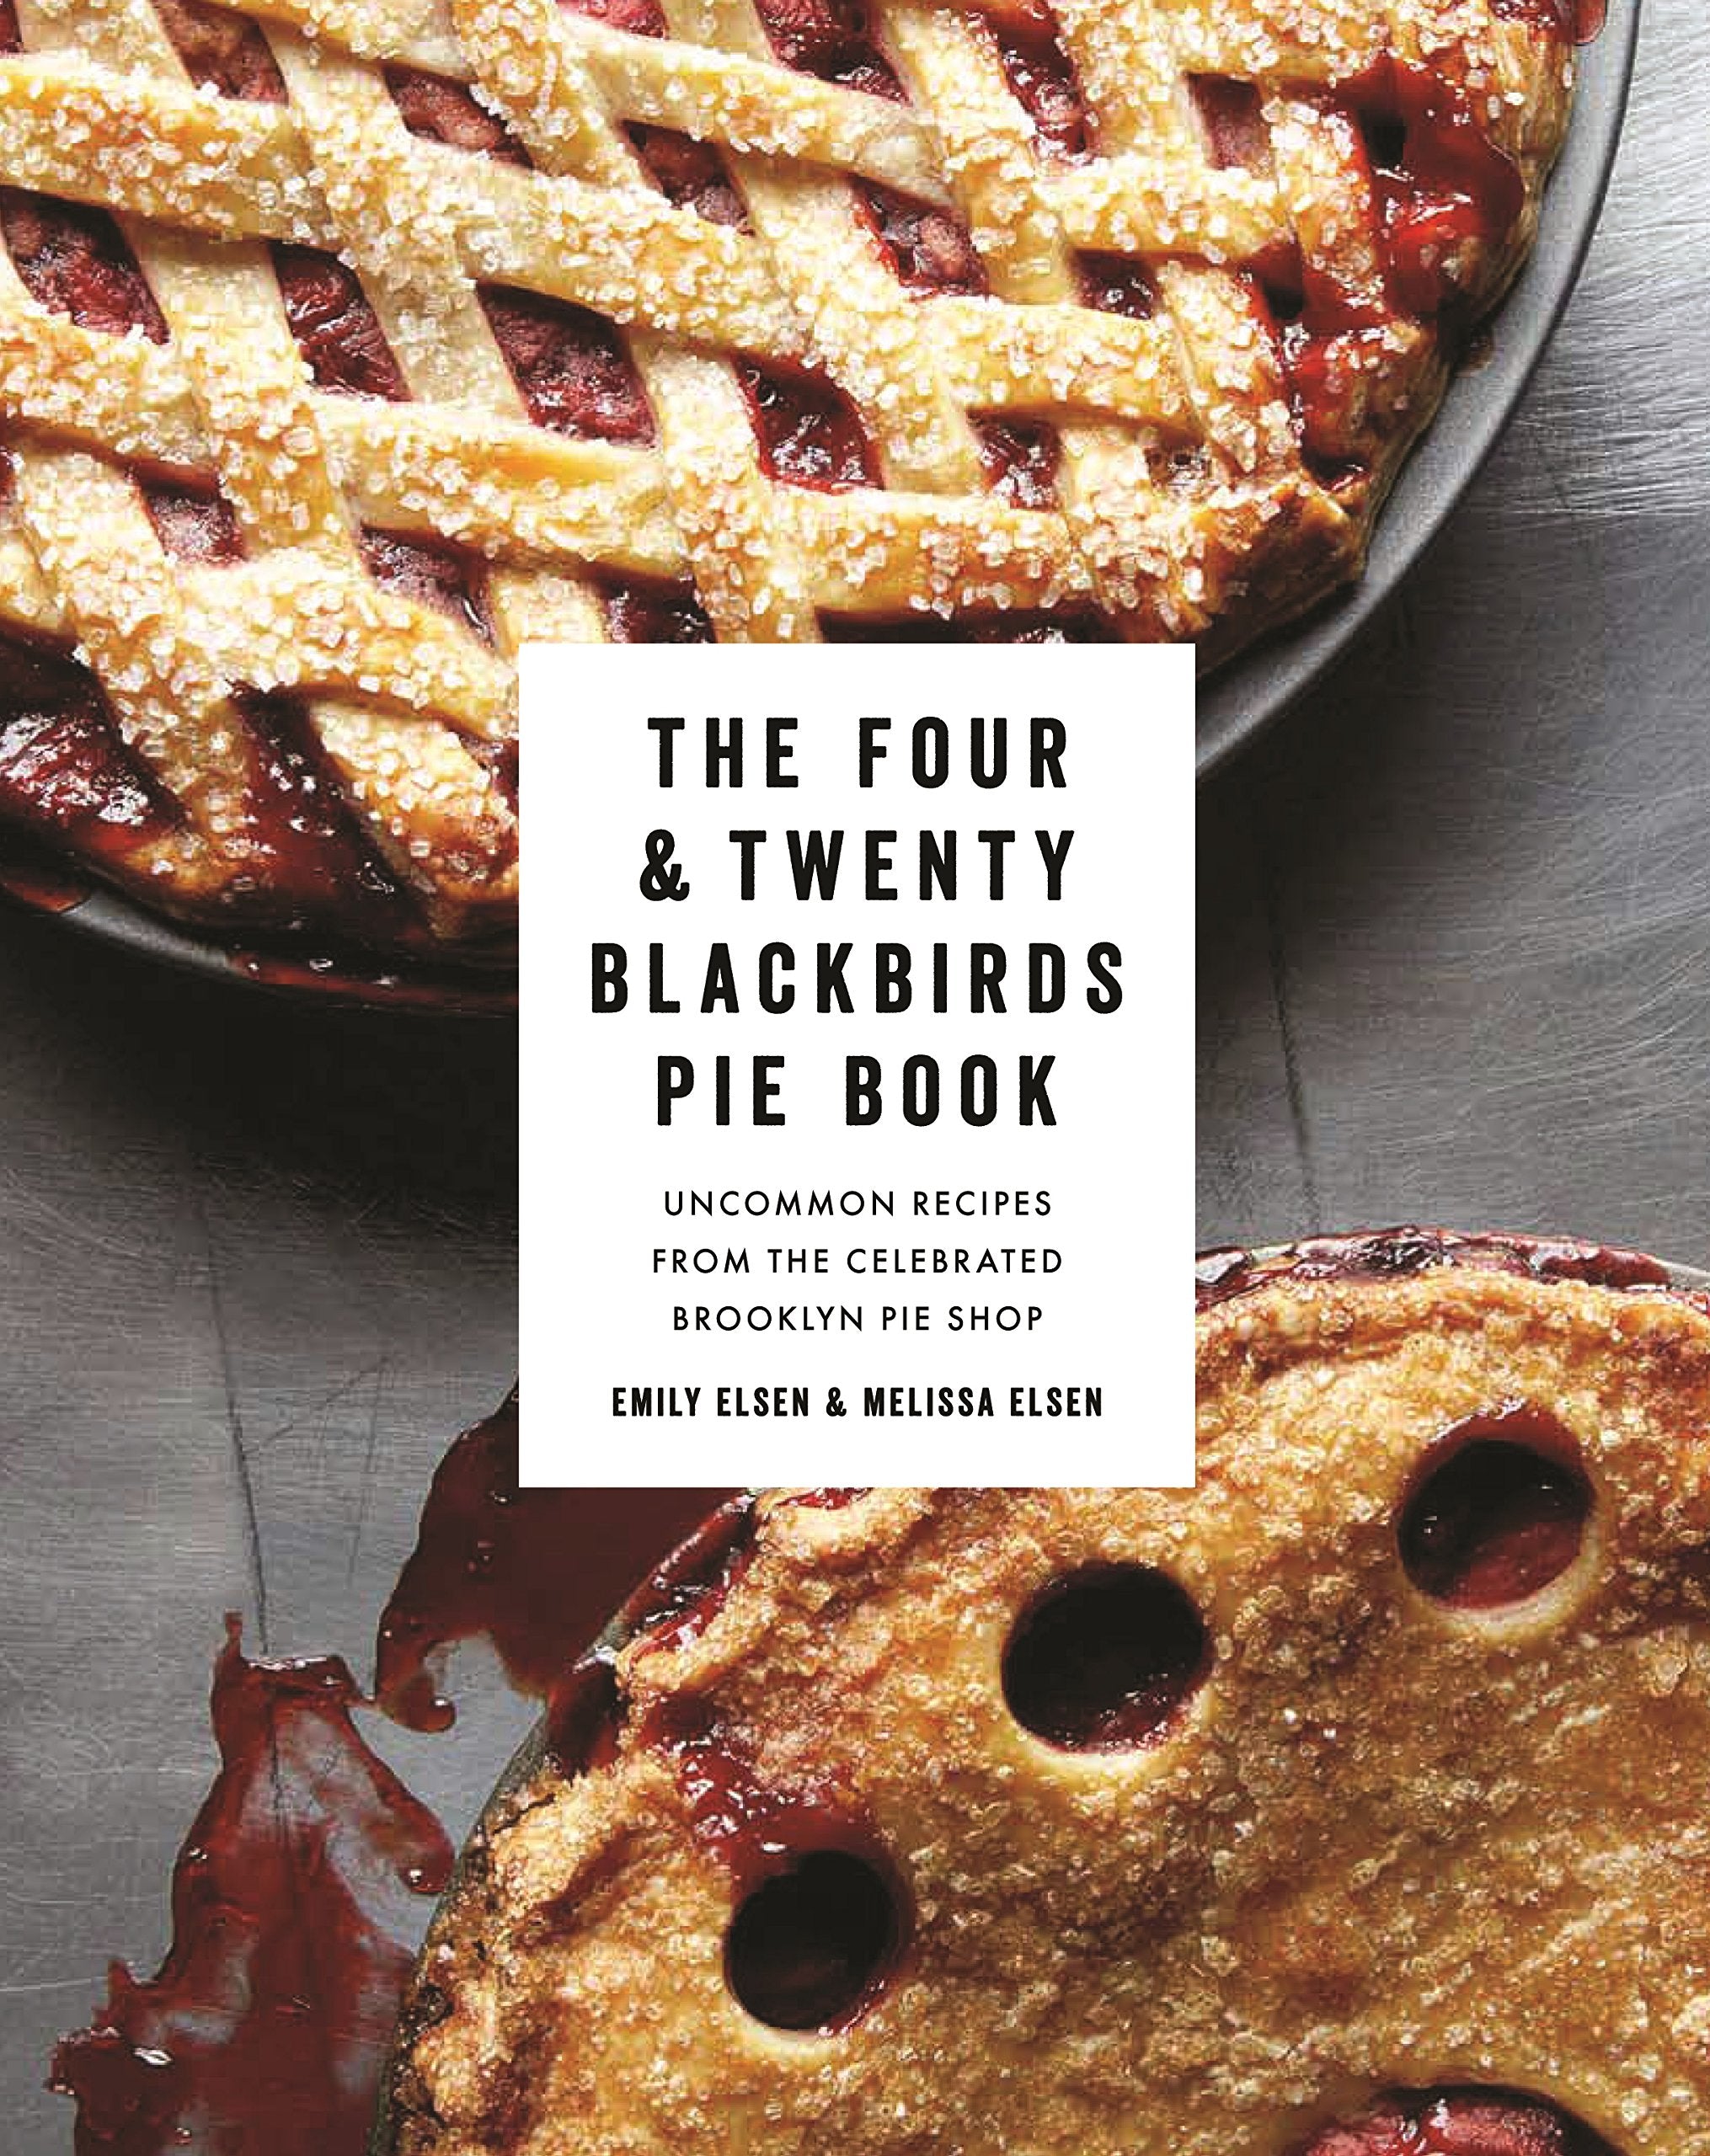 The Four & Twenty Blackbirds Pie Book: Uncommon Recipes from the Celebrated Brooklyn Pie Shop (Emily Elsen, Melissa Elsen)